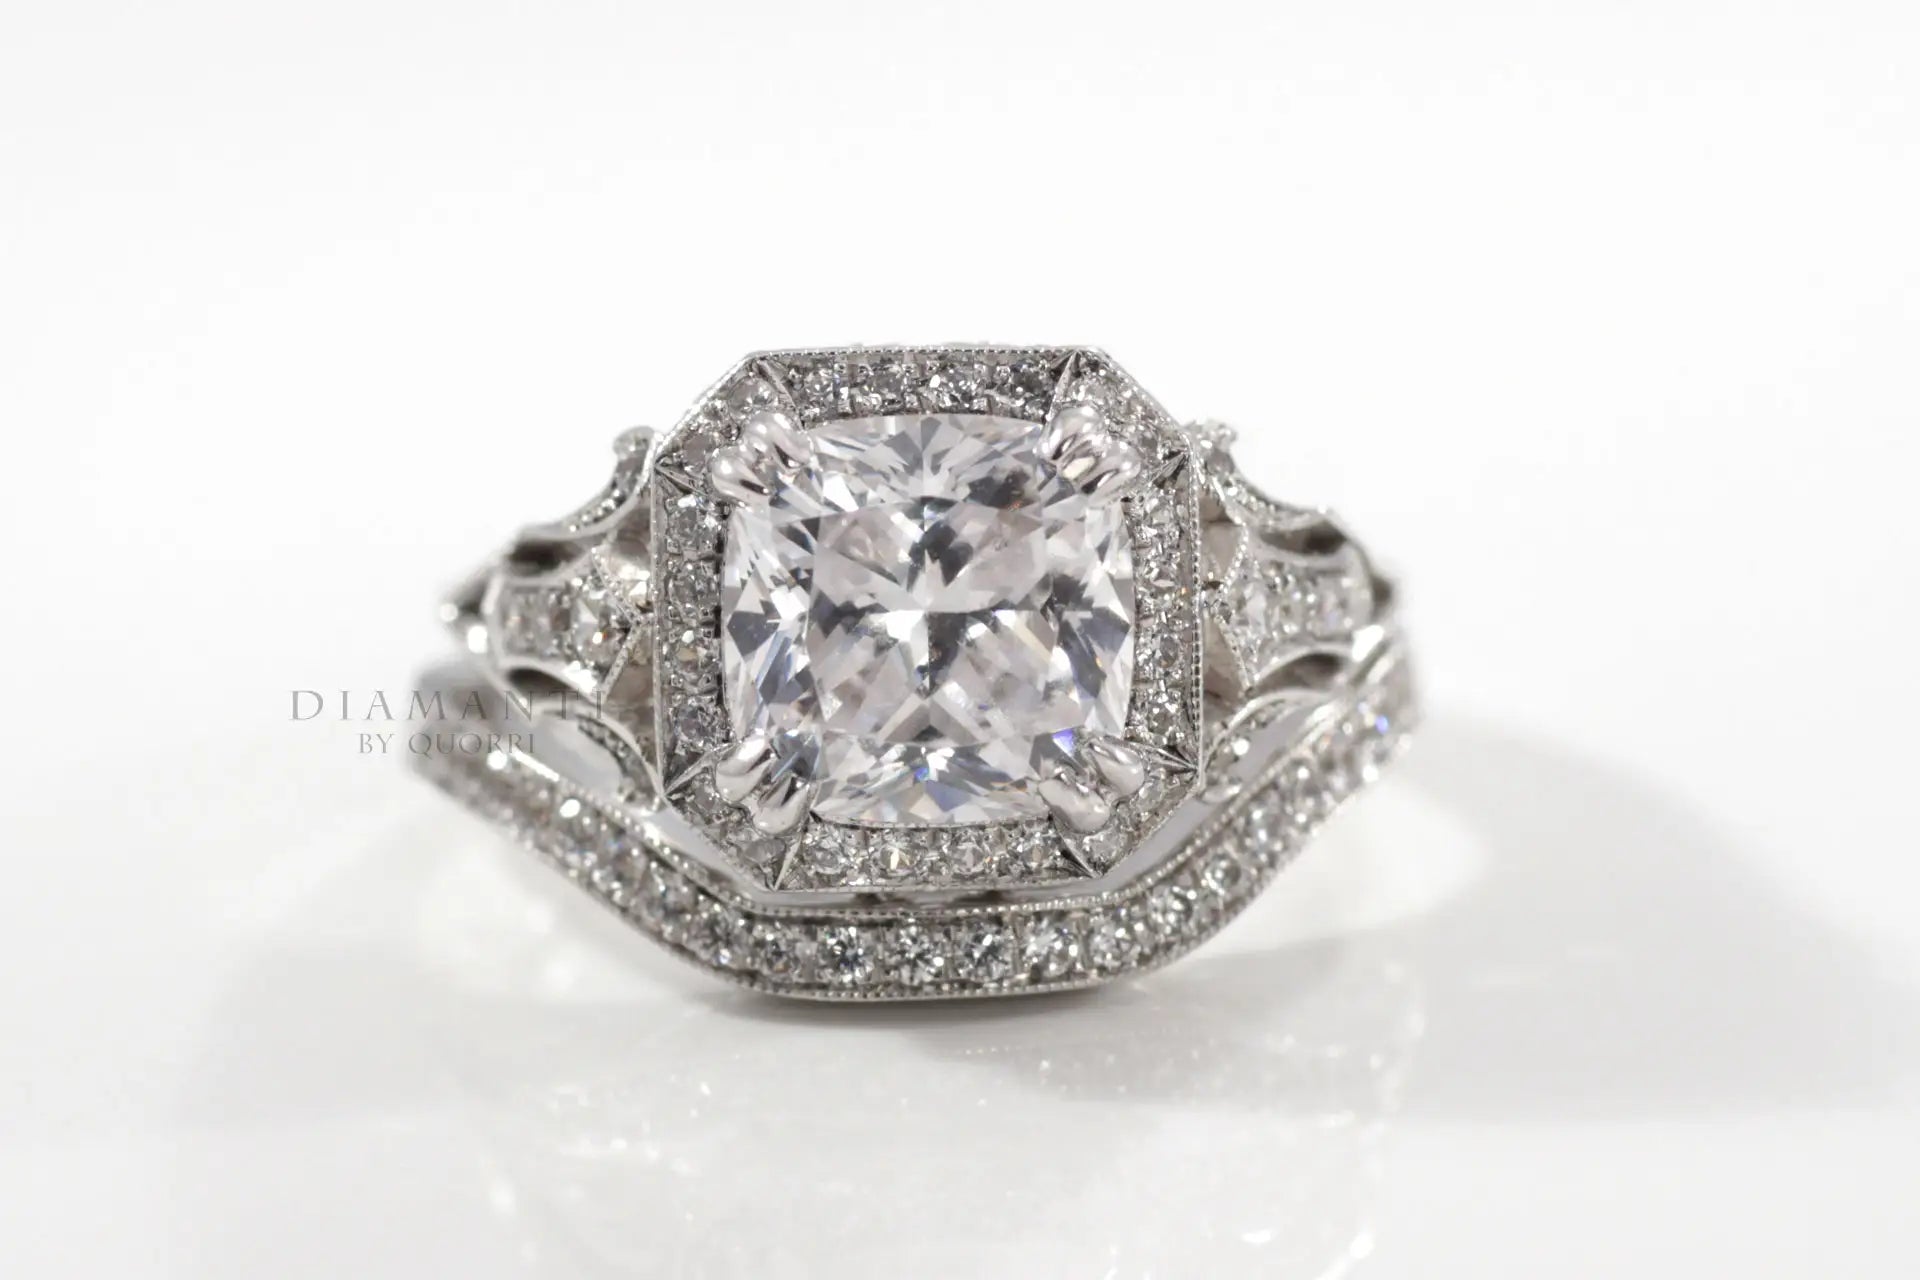 antique affordable round and cushion lab diamond wedding ring set at Quorri